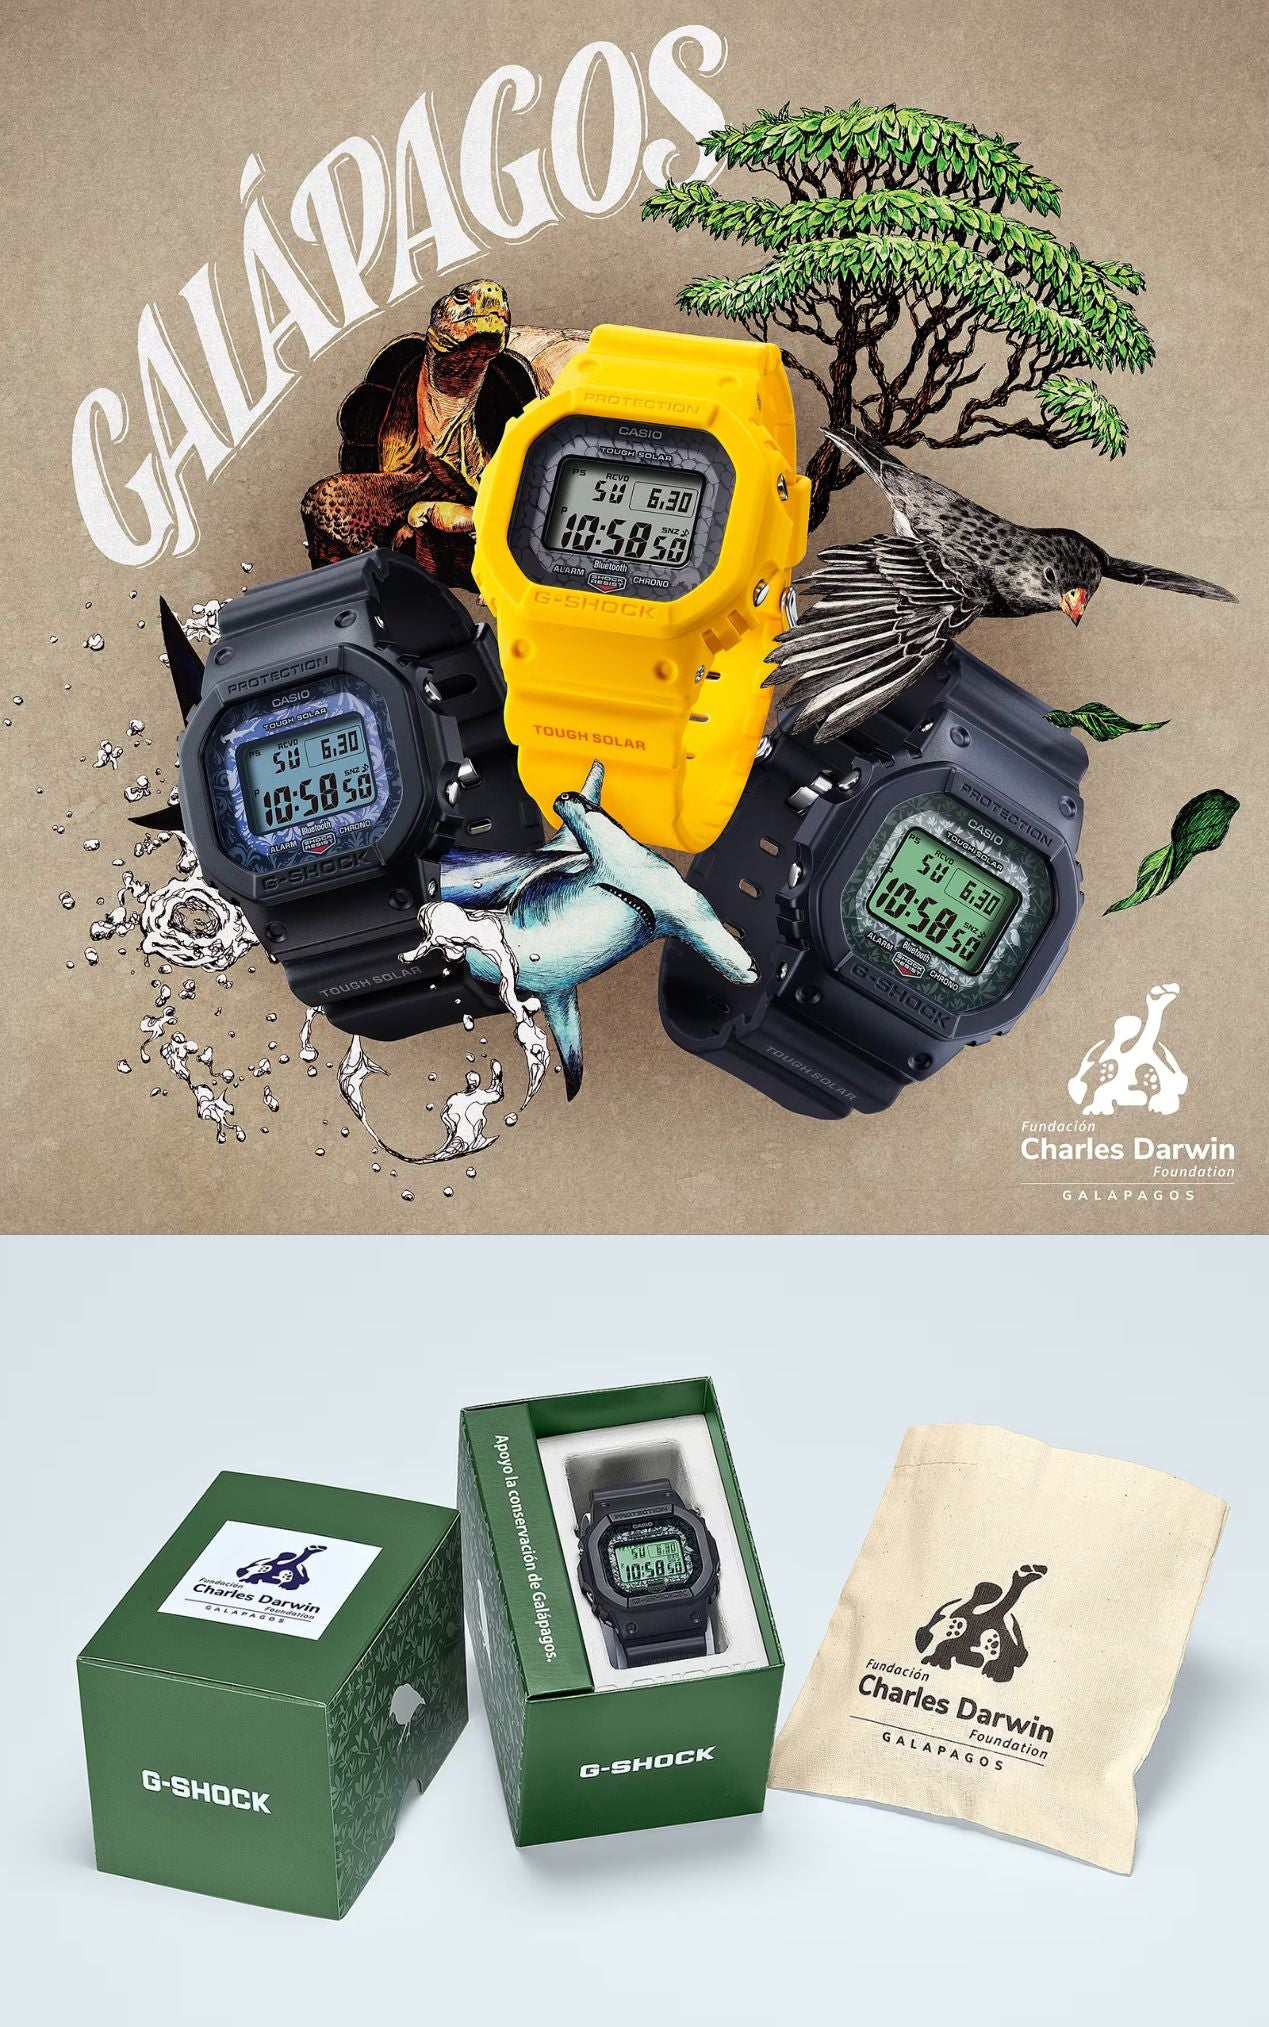 Reloj G-Shock GW-B5600CD-1A3ER